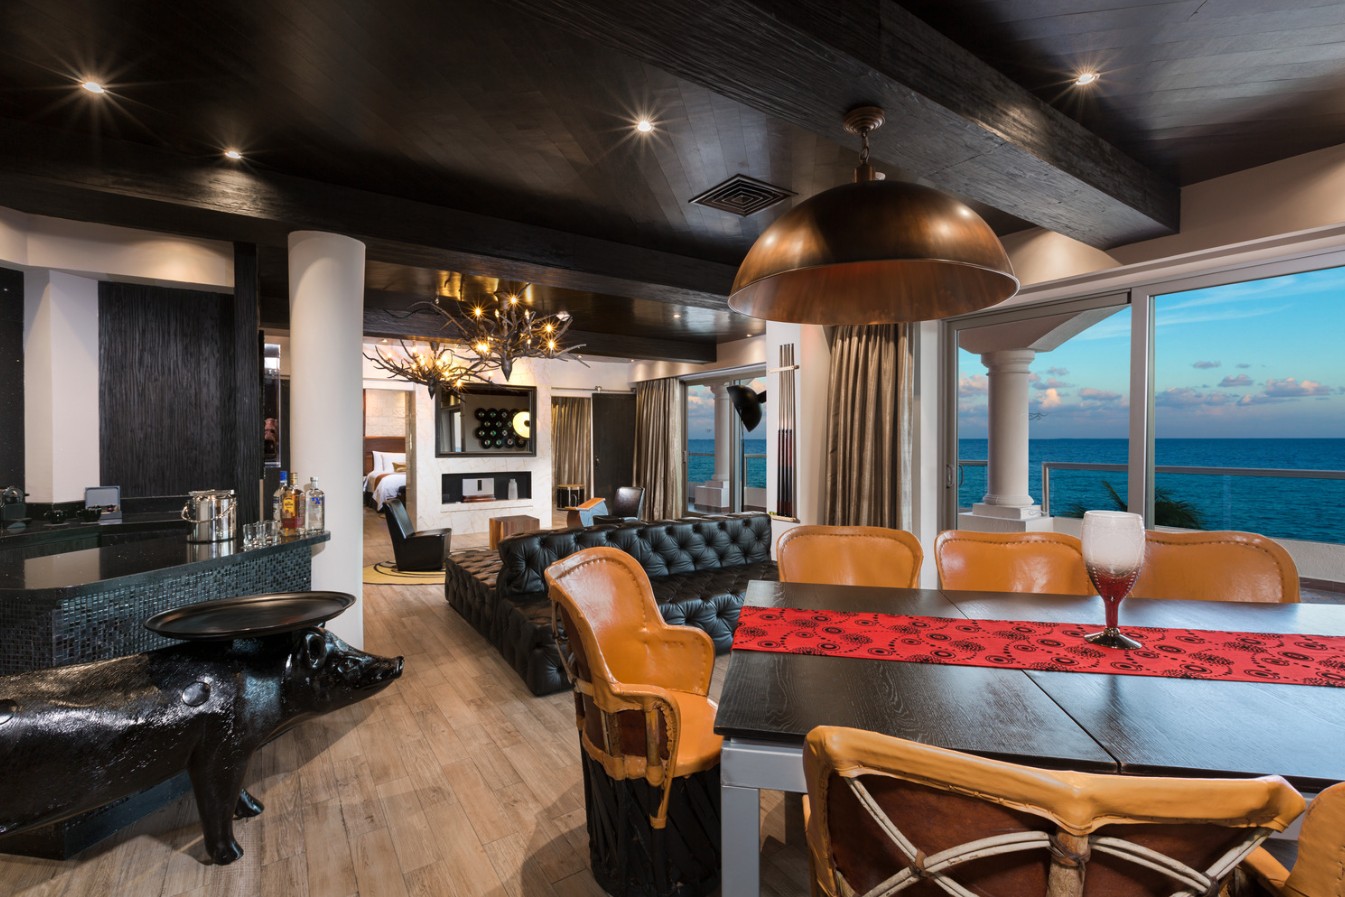 Rock Star Suite Ocean Front 2 Bedroom With Personal Assistant (Hacienda), Hard Rock Hotel Riviera Maya 5*